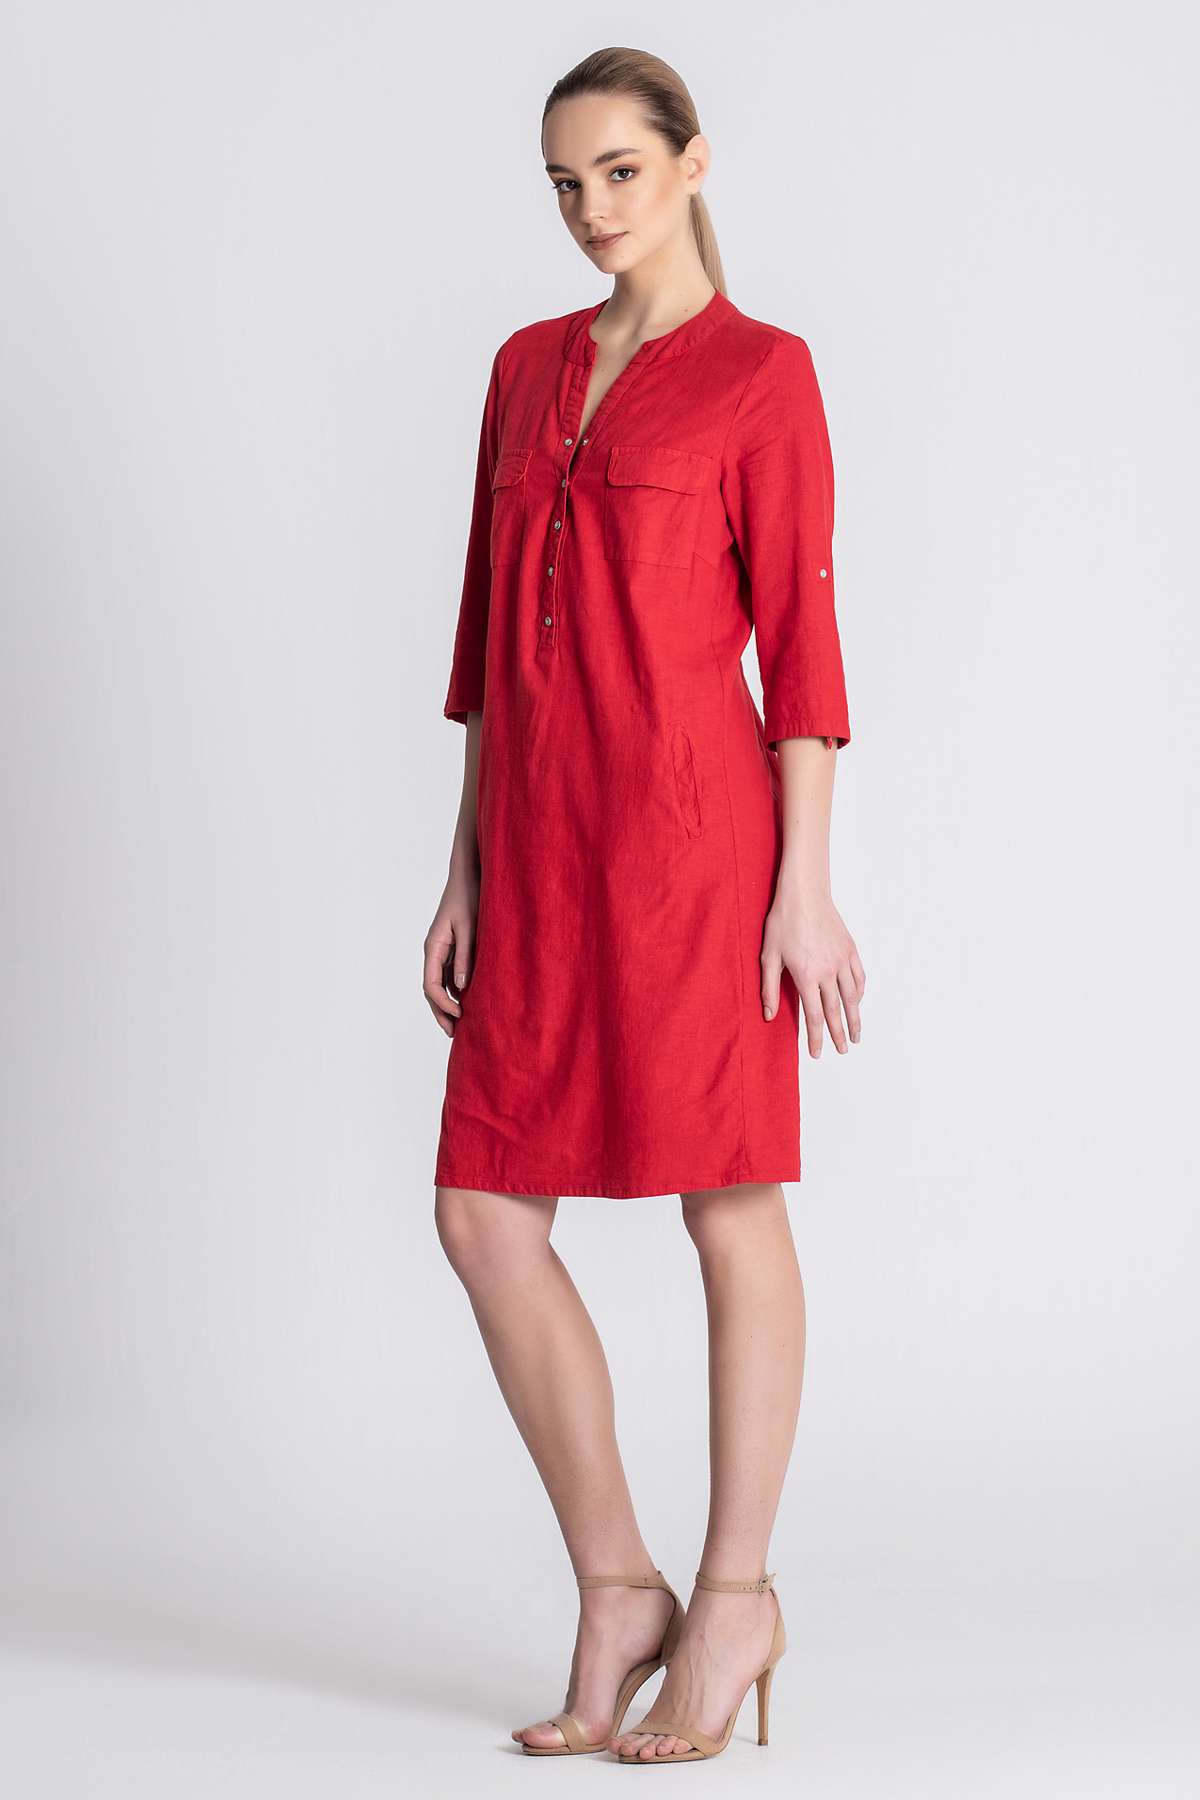 Ella Red Dress front2